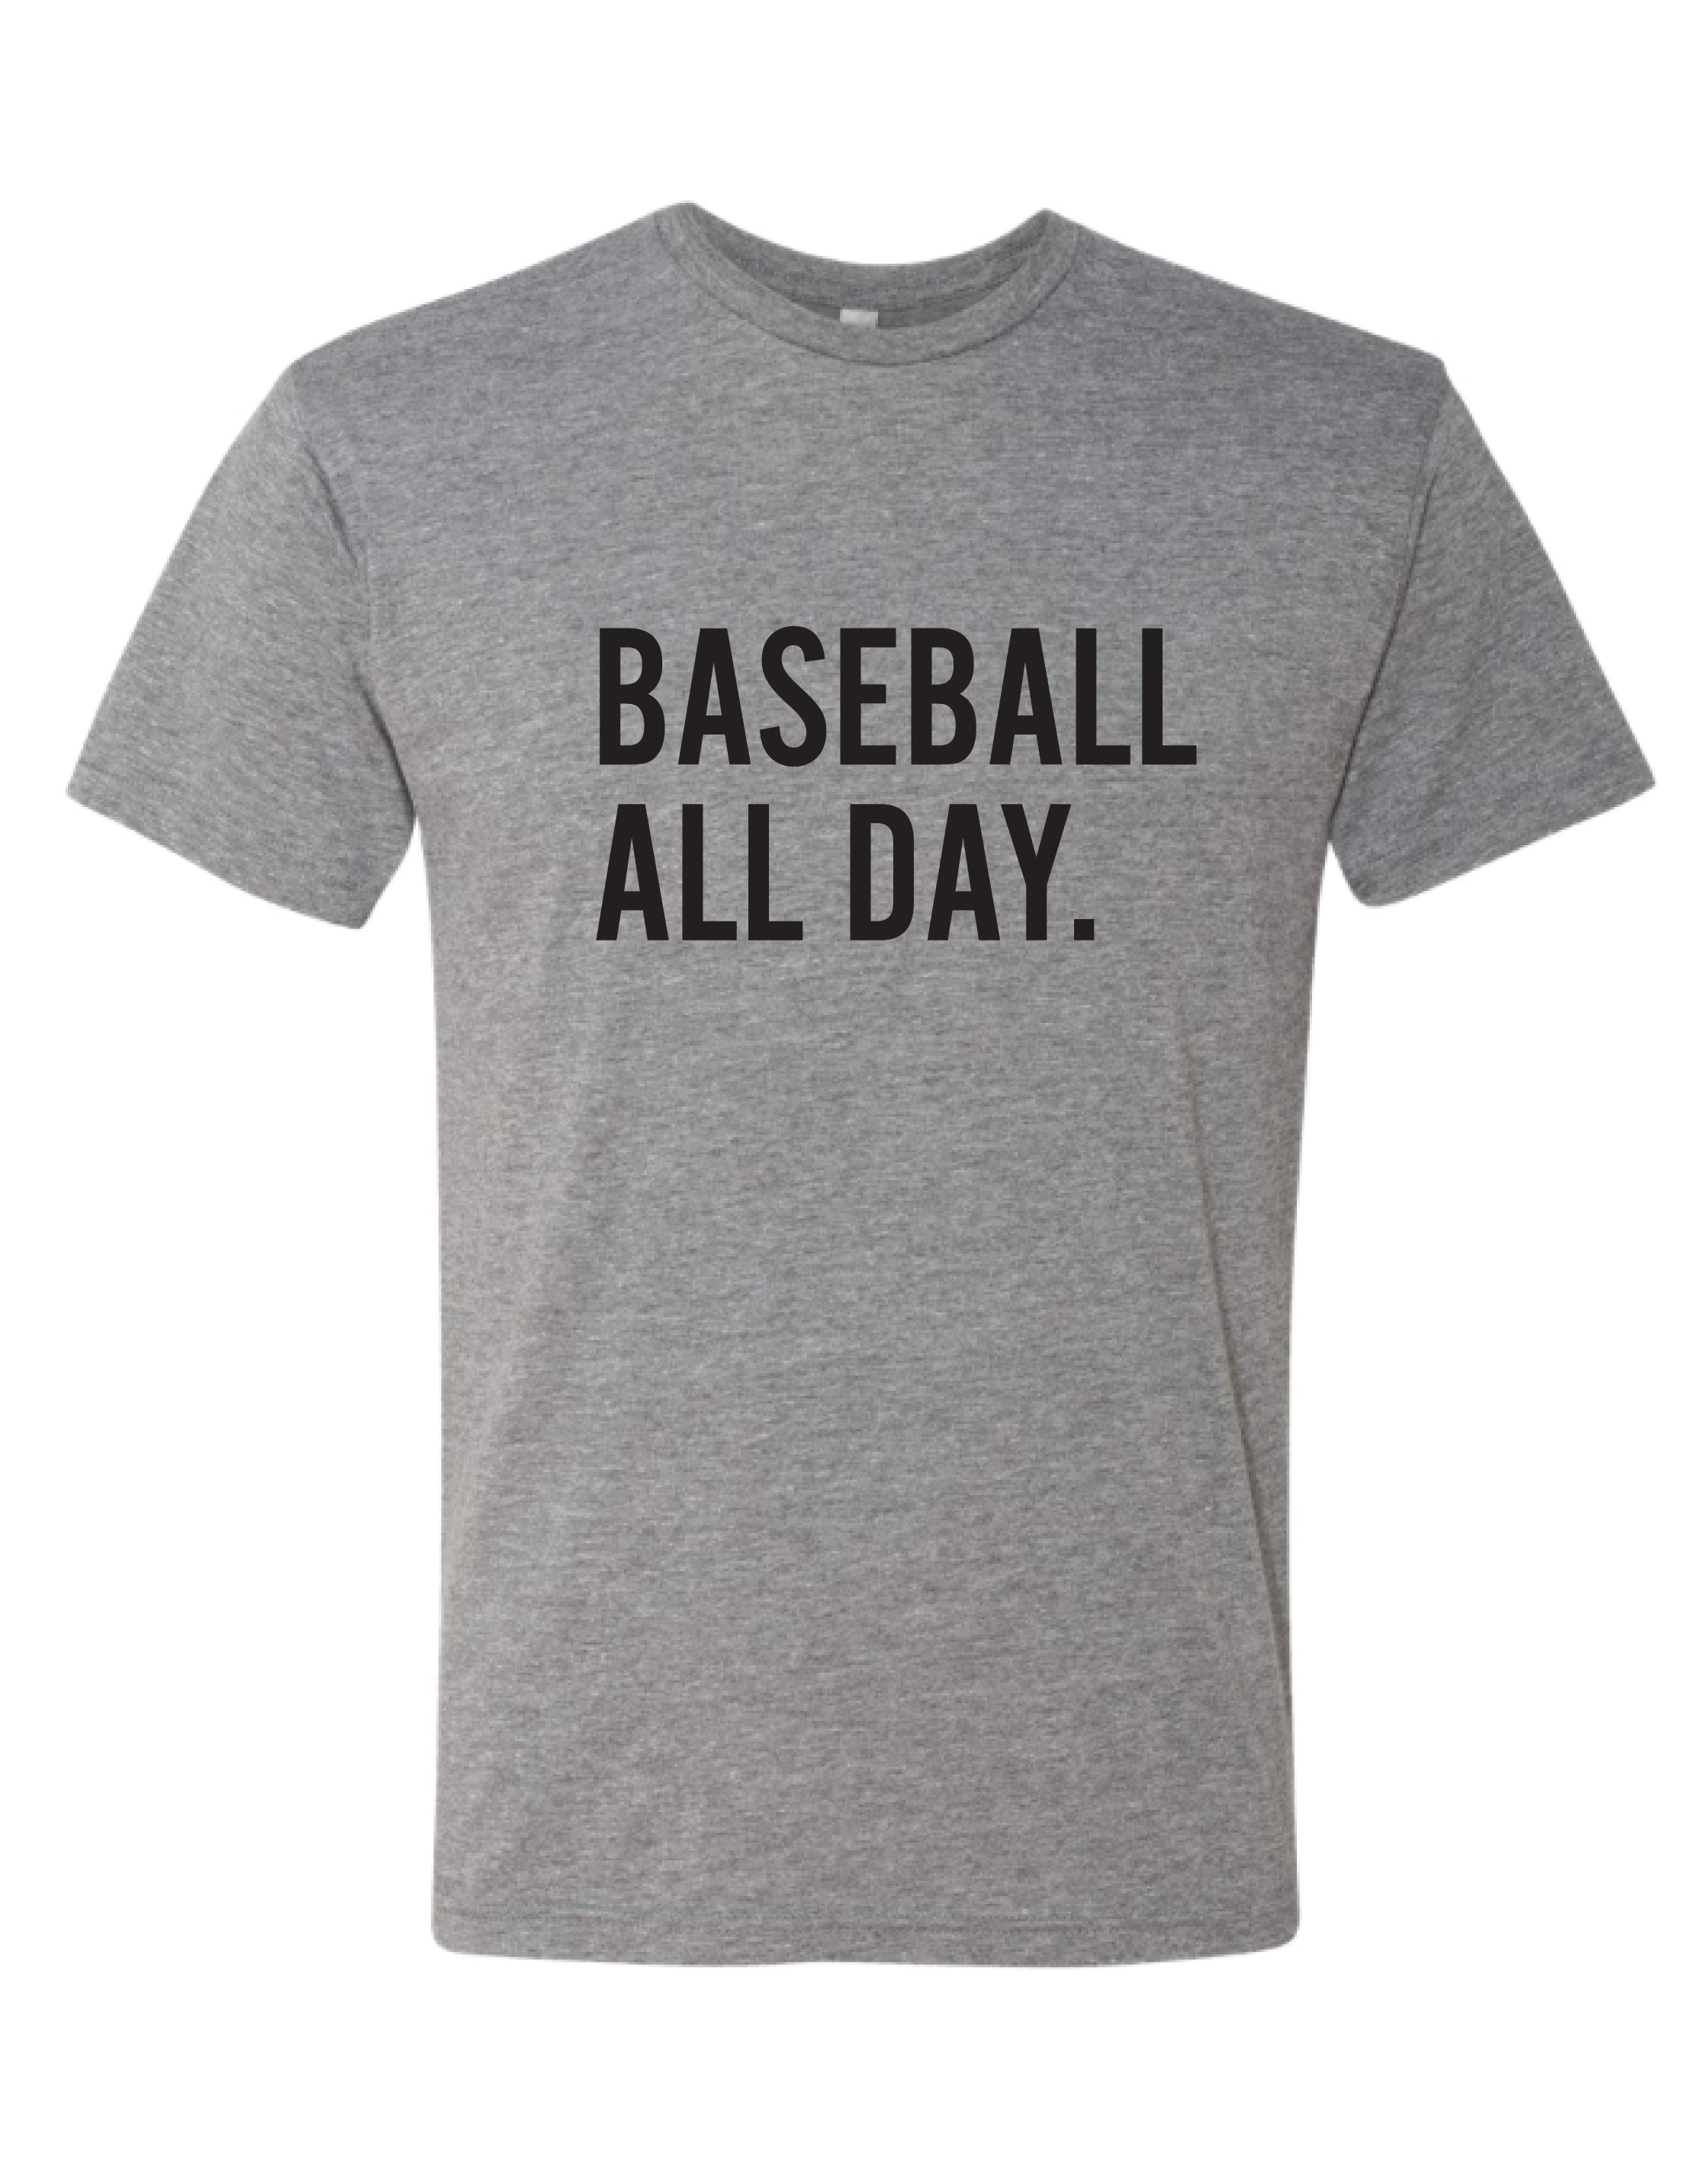 Baseball All Day - Unisex Triblend Crew Tee